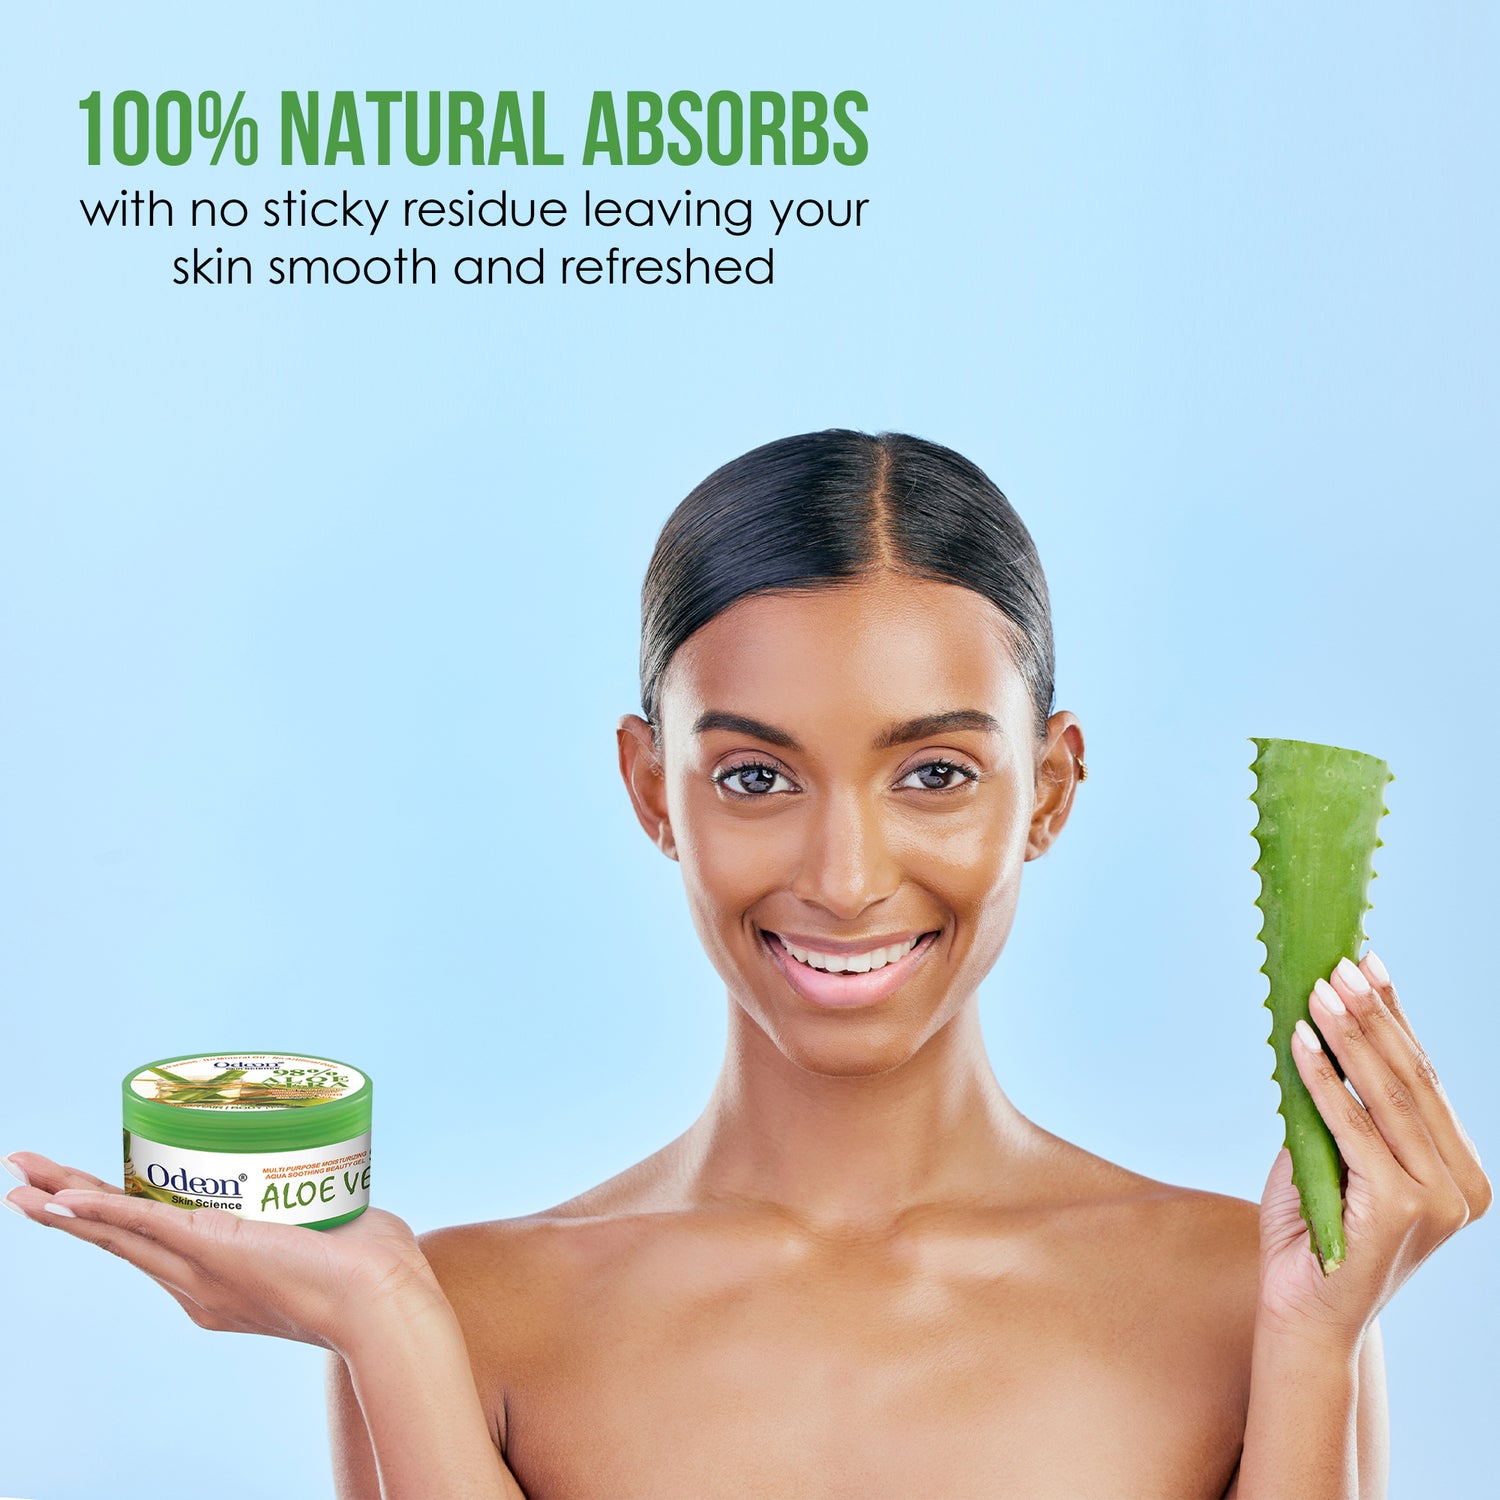 Odeon Skin Science Aloe Vera Reduces Dandruff  Gel